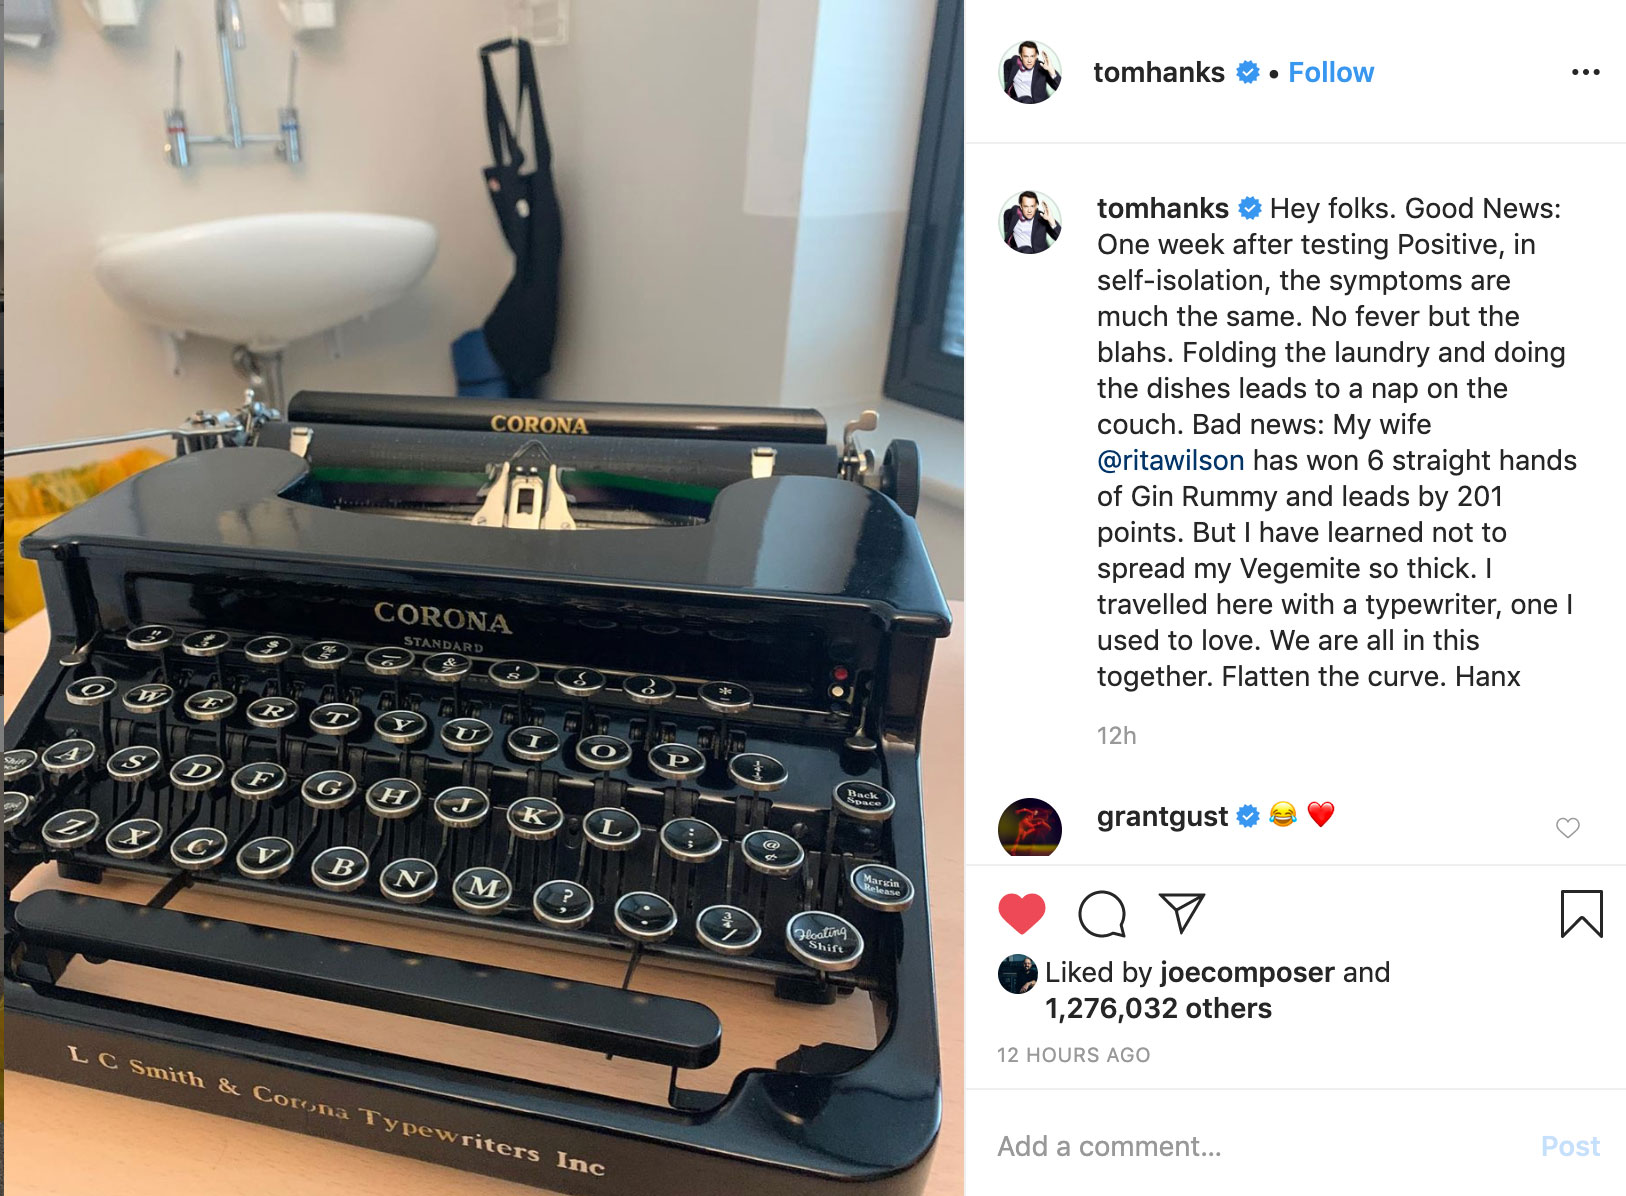 Tom Hanks shares Corona Typewriter image after recovering from Coronavirus